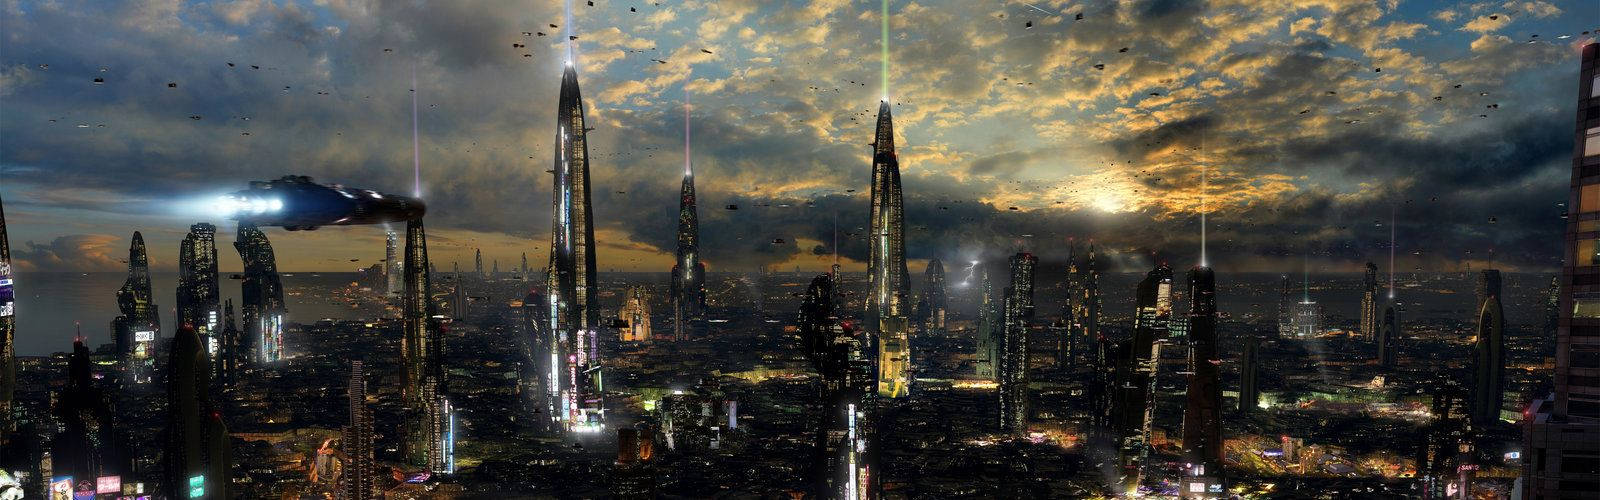 Futuristic City Cloudy Day Wallpaper